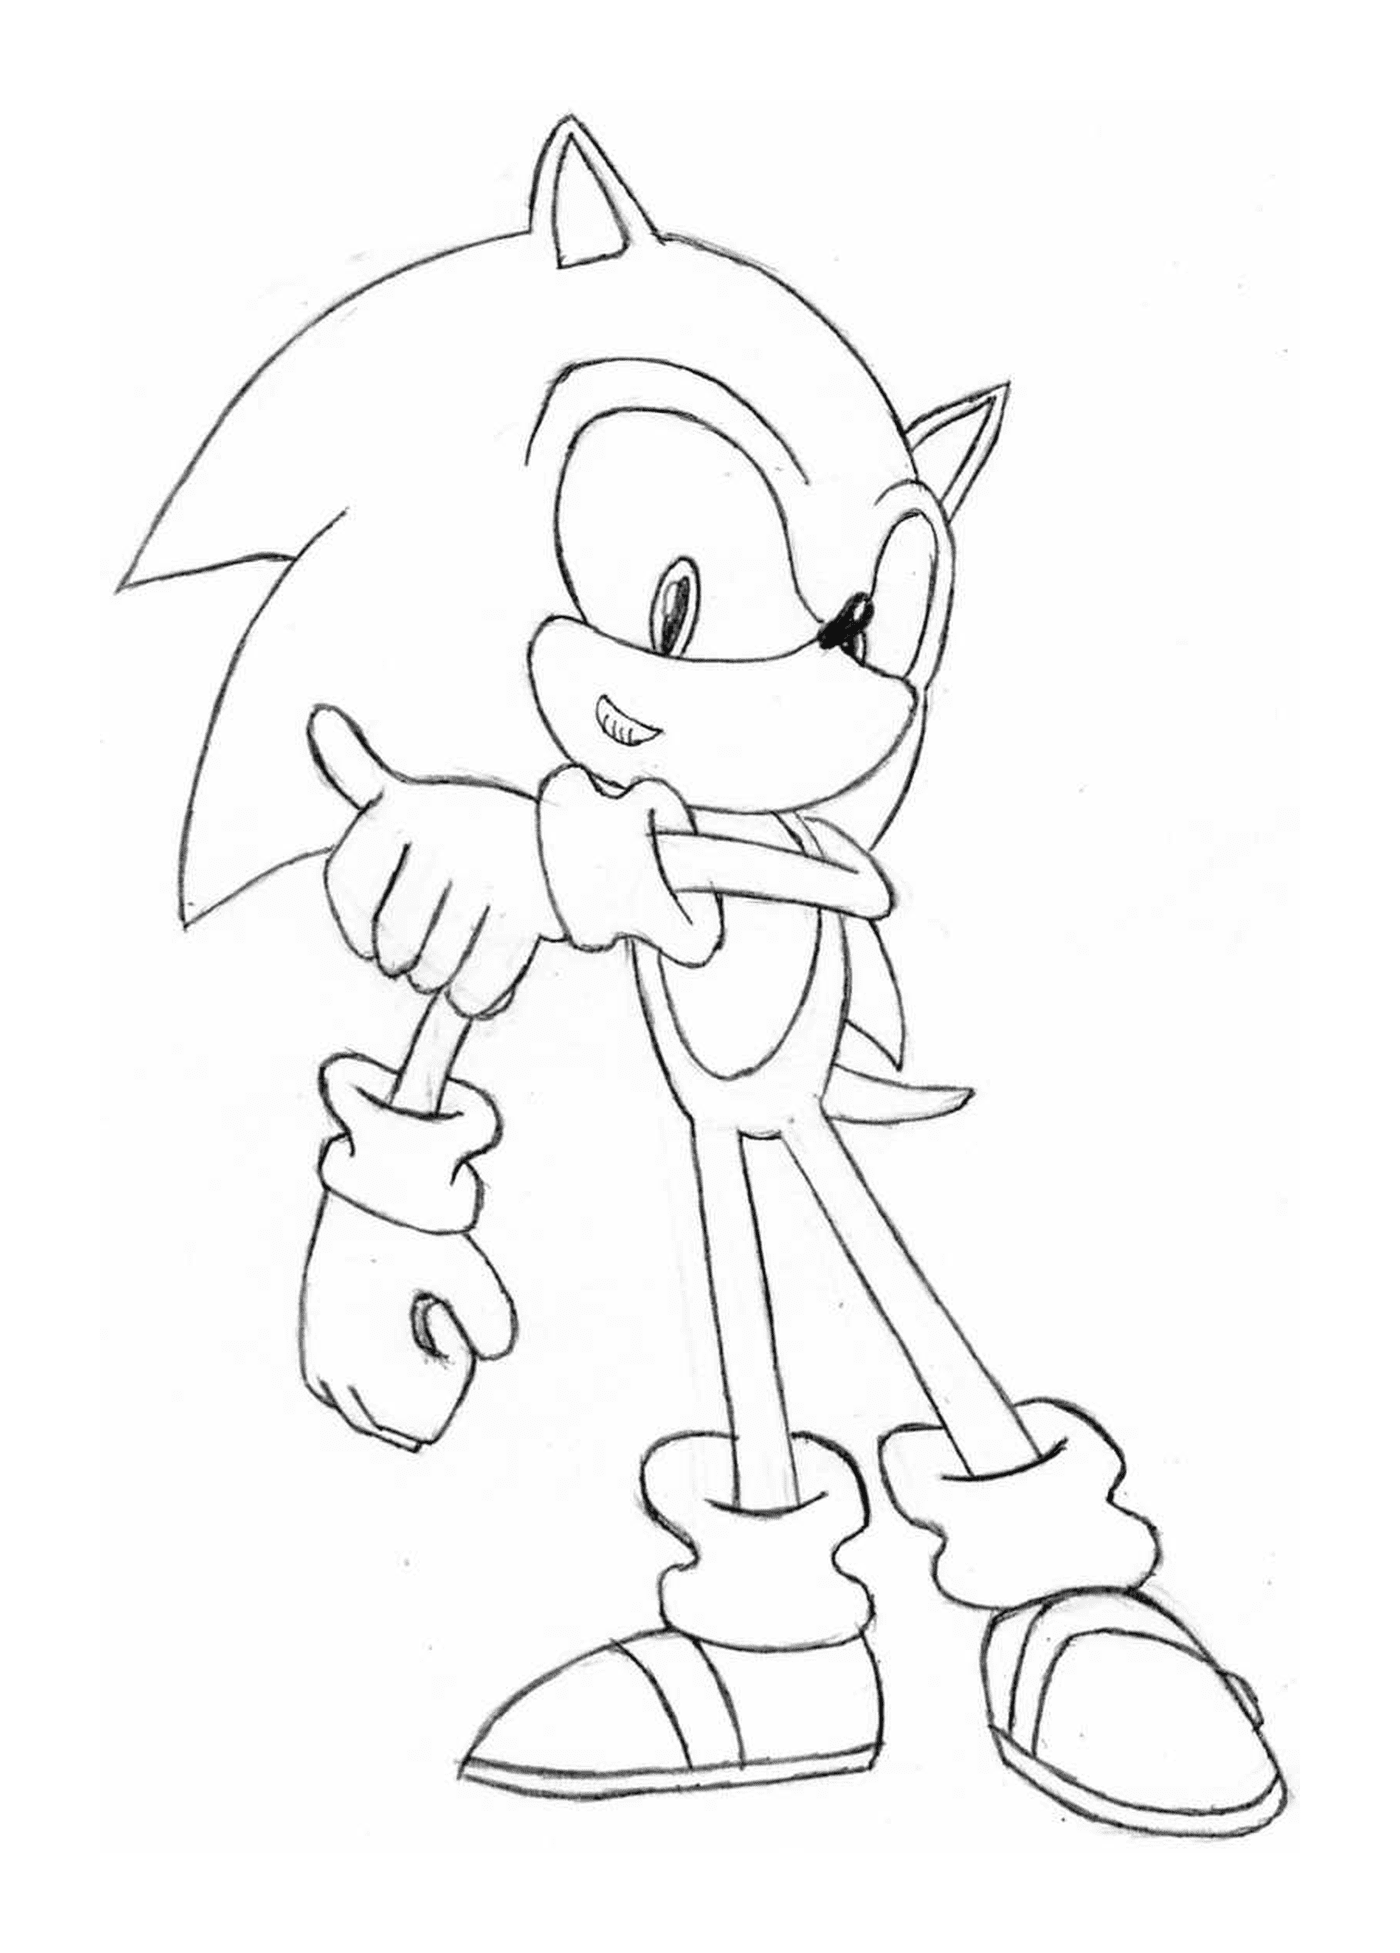  Super energico Sonic 